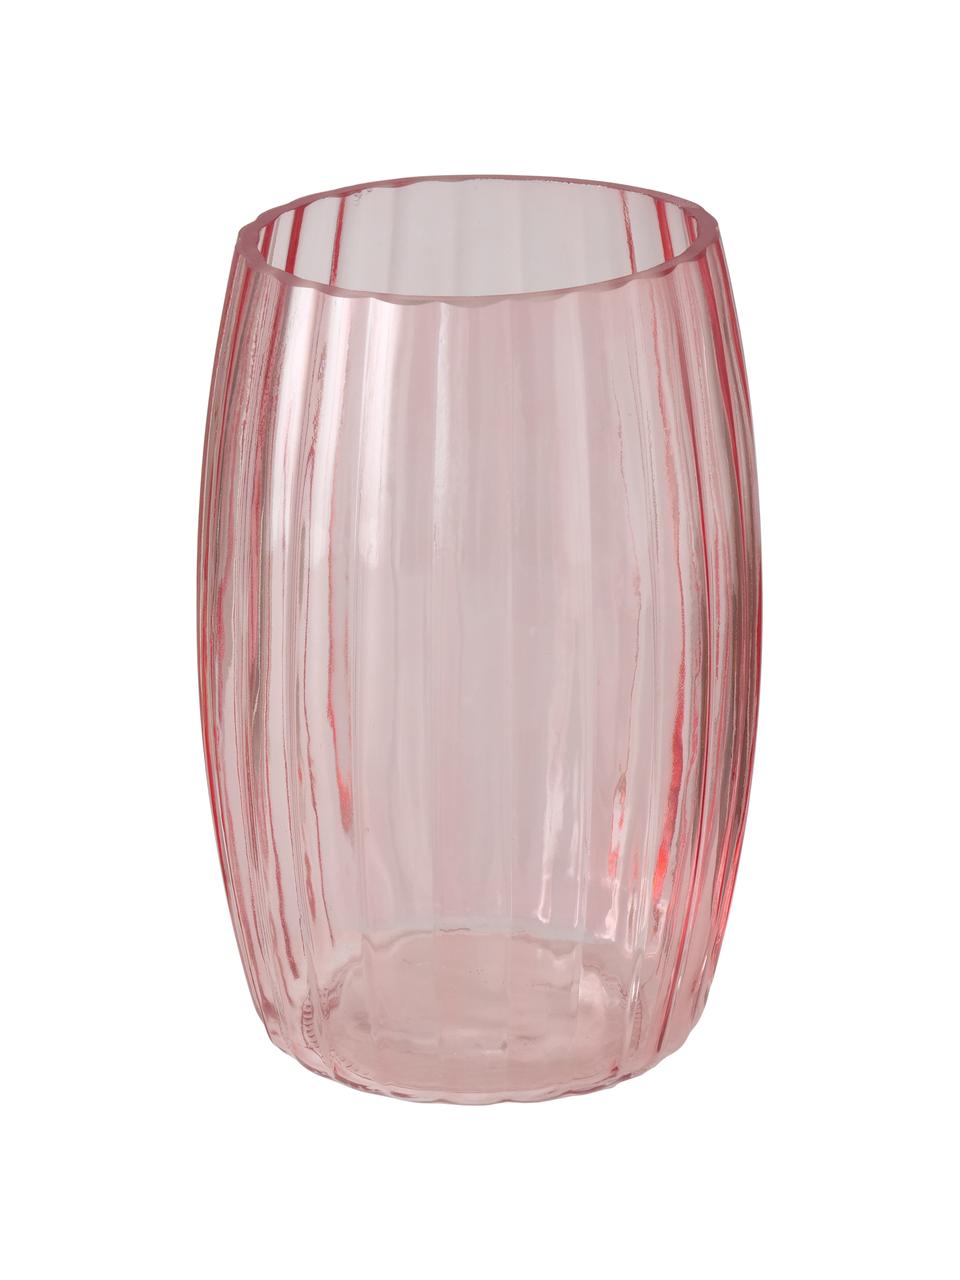 Vase rose transparent Malinia, 3 élém., Verre, Rose, transparent, Ø 13 x haut. 19 cm